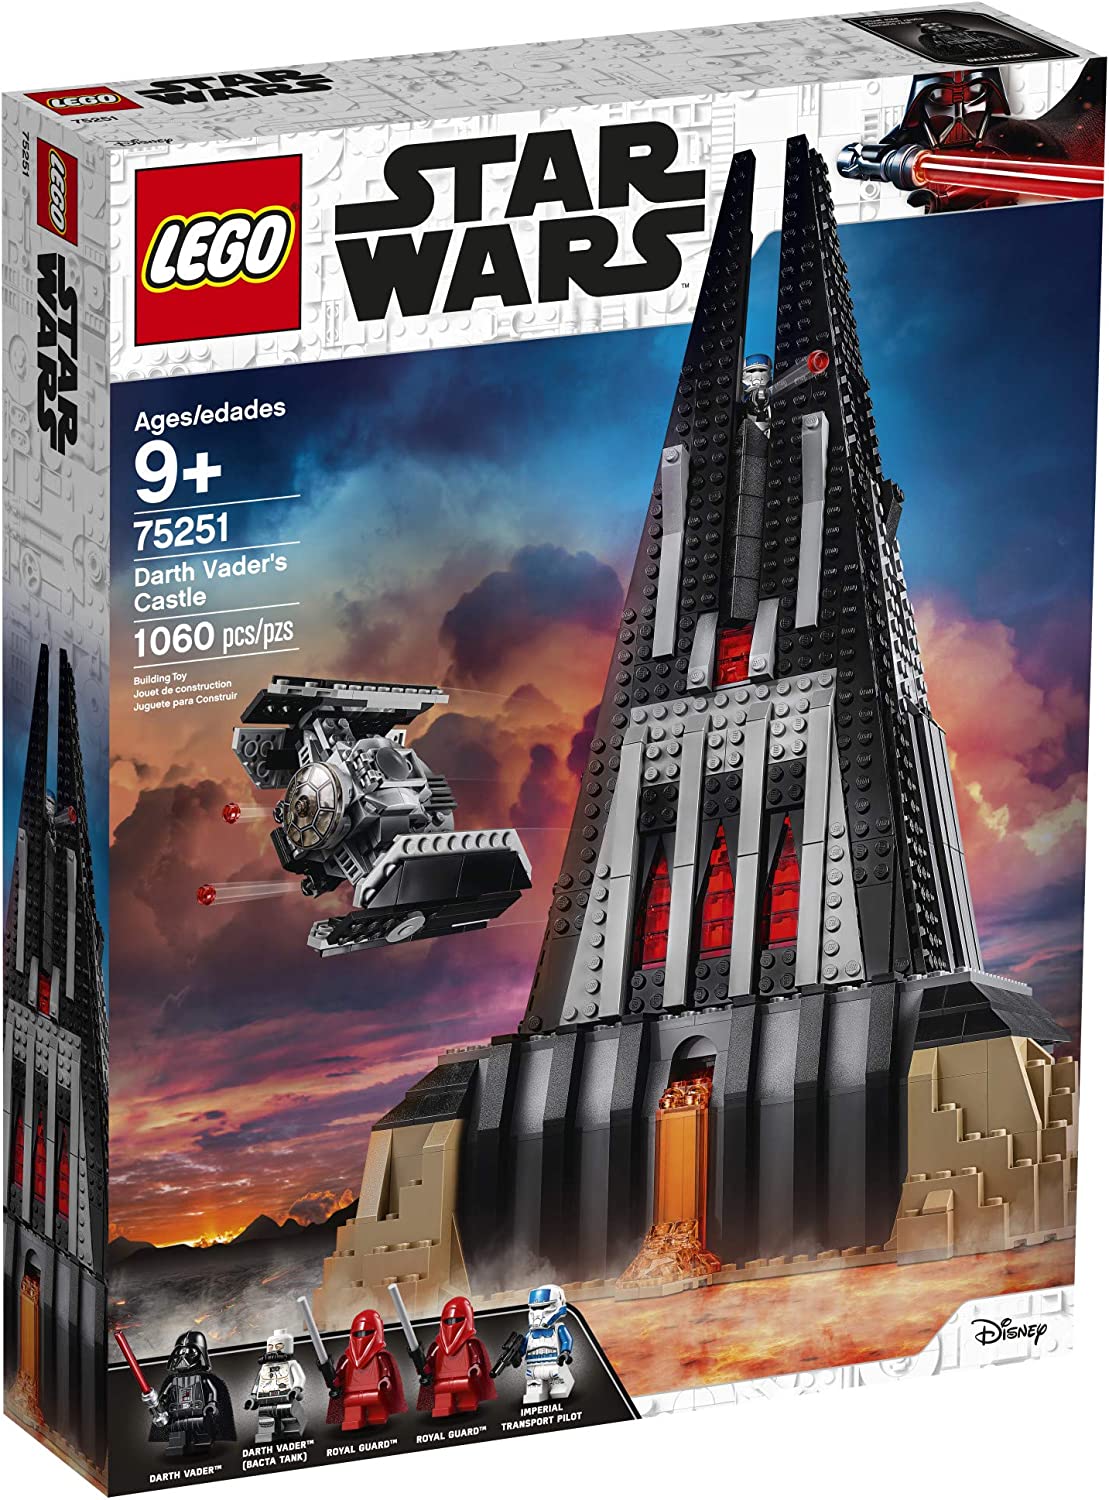 LEGO Star Wars Darth Vader's Castle (75251)